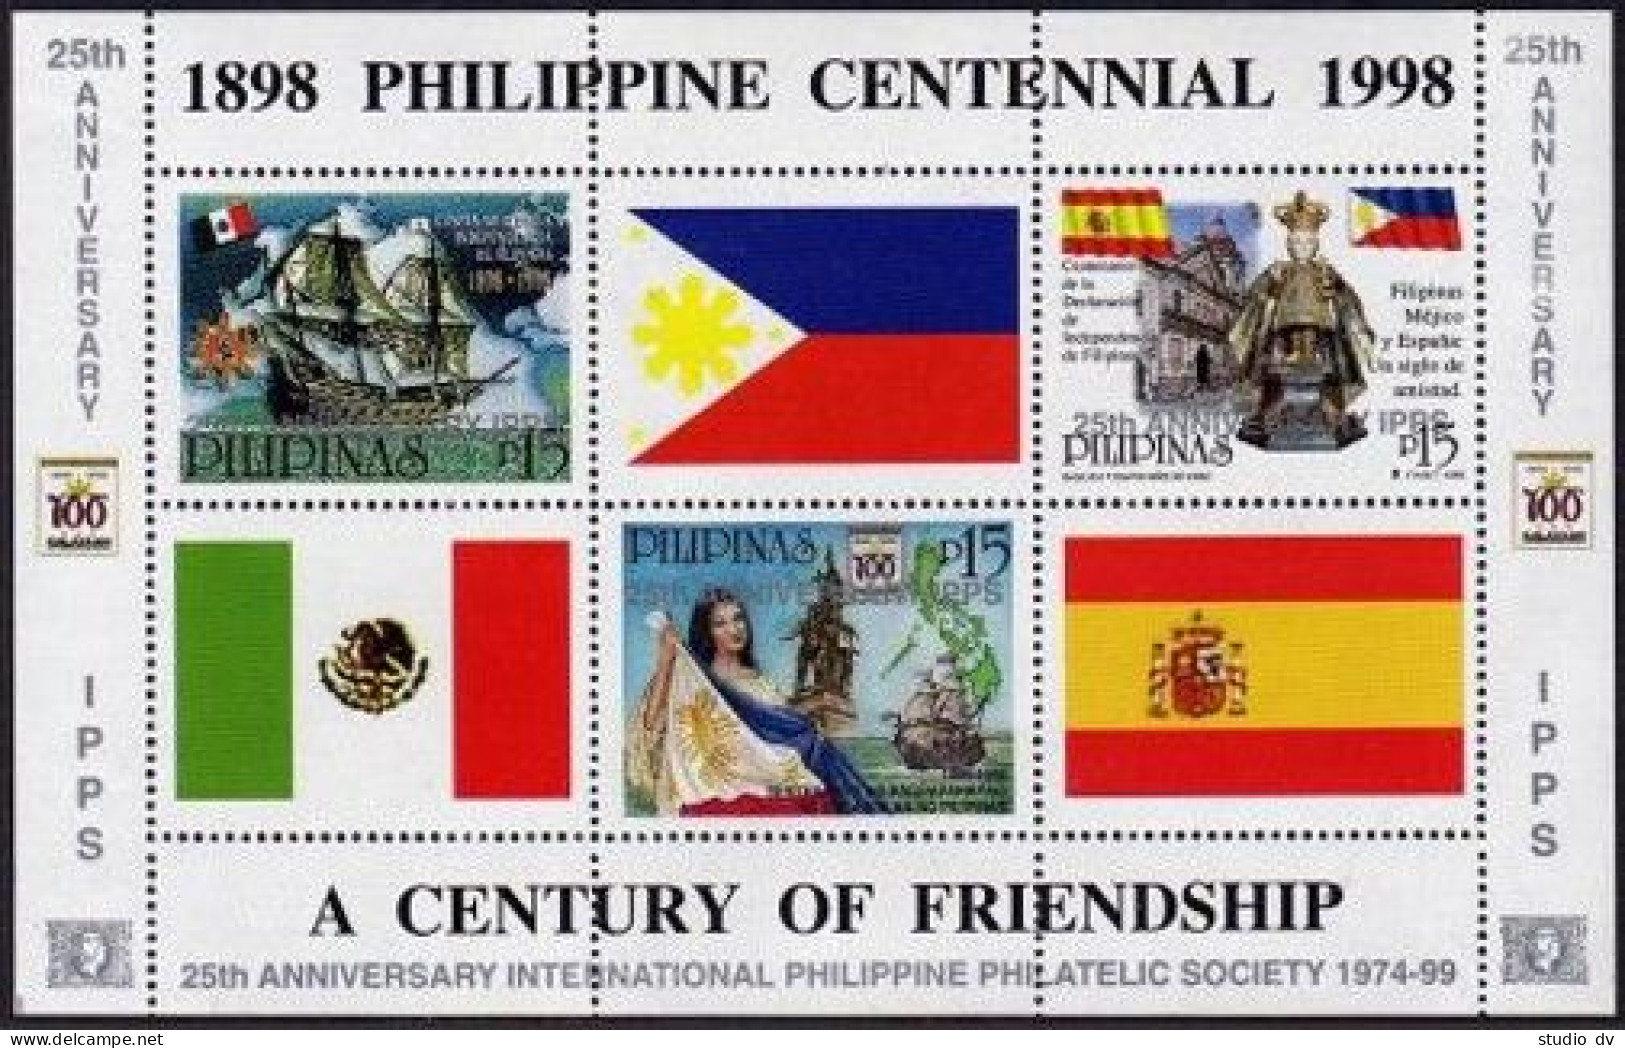 Philippines 2629 Sheet,MNH. Independence Centenary.Philatelic Society,1999.Ships - Philippines